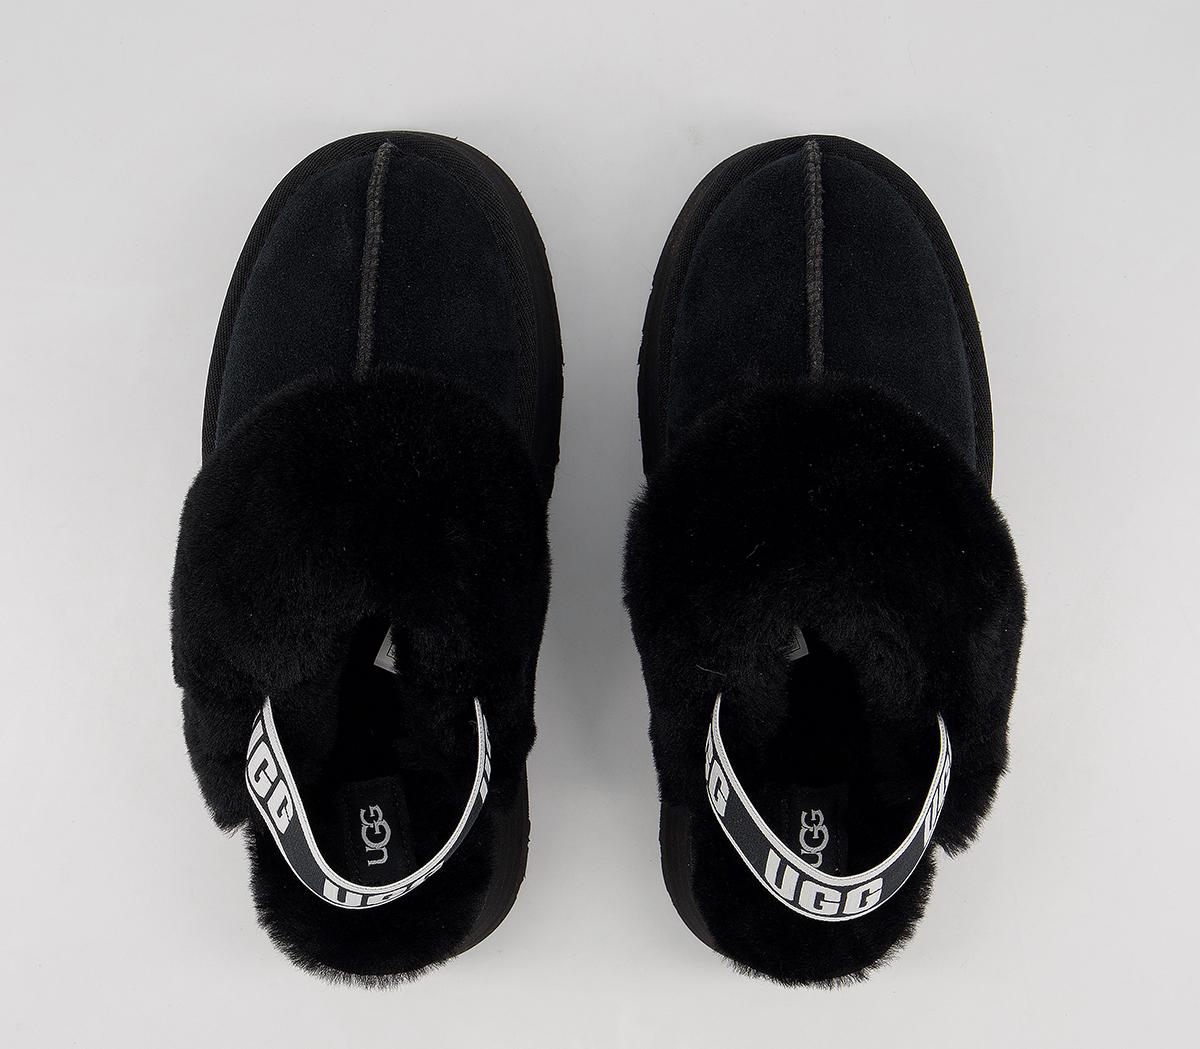 UGG Funkette Slippers Black - Flat Shoes for Women